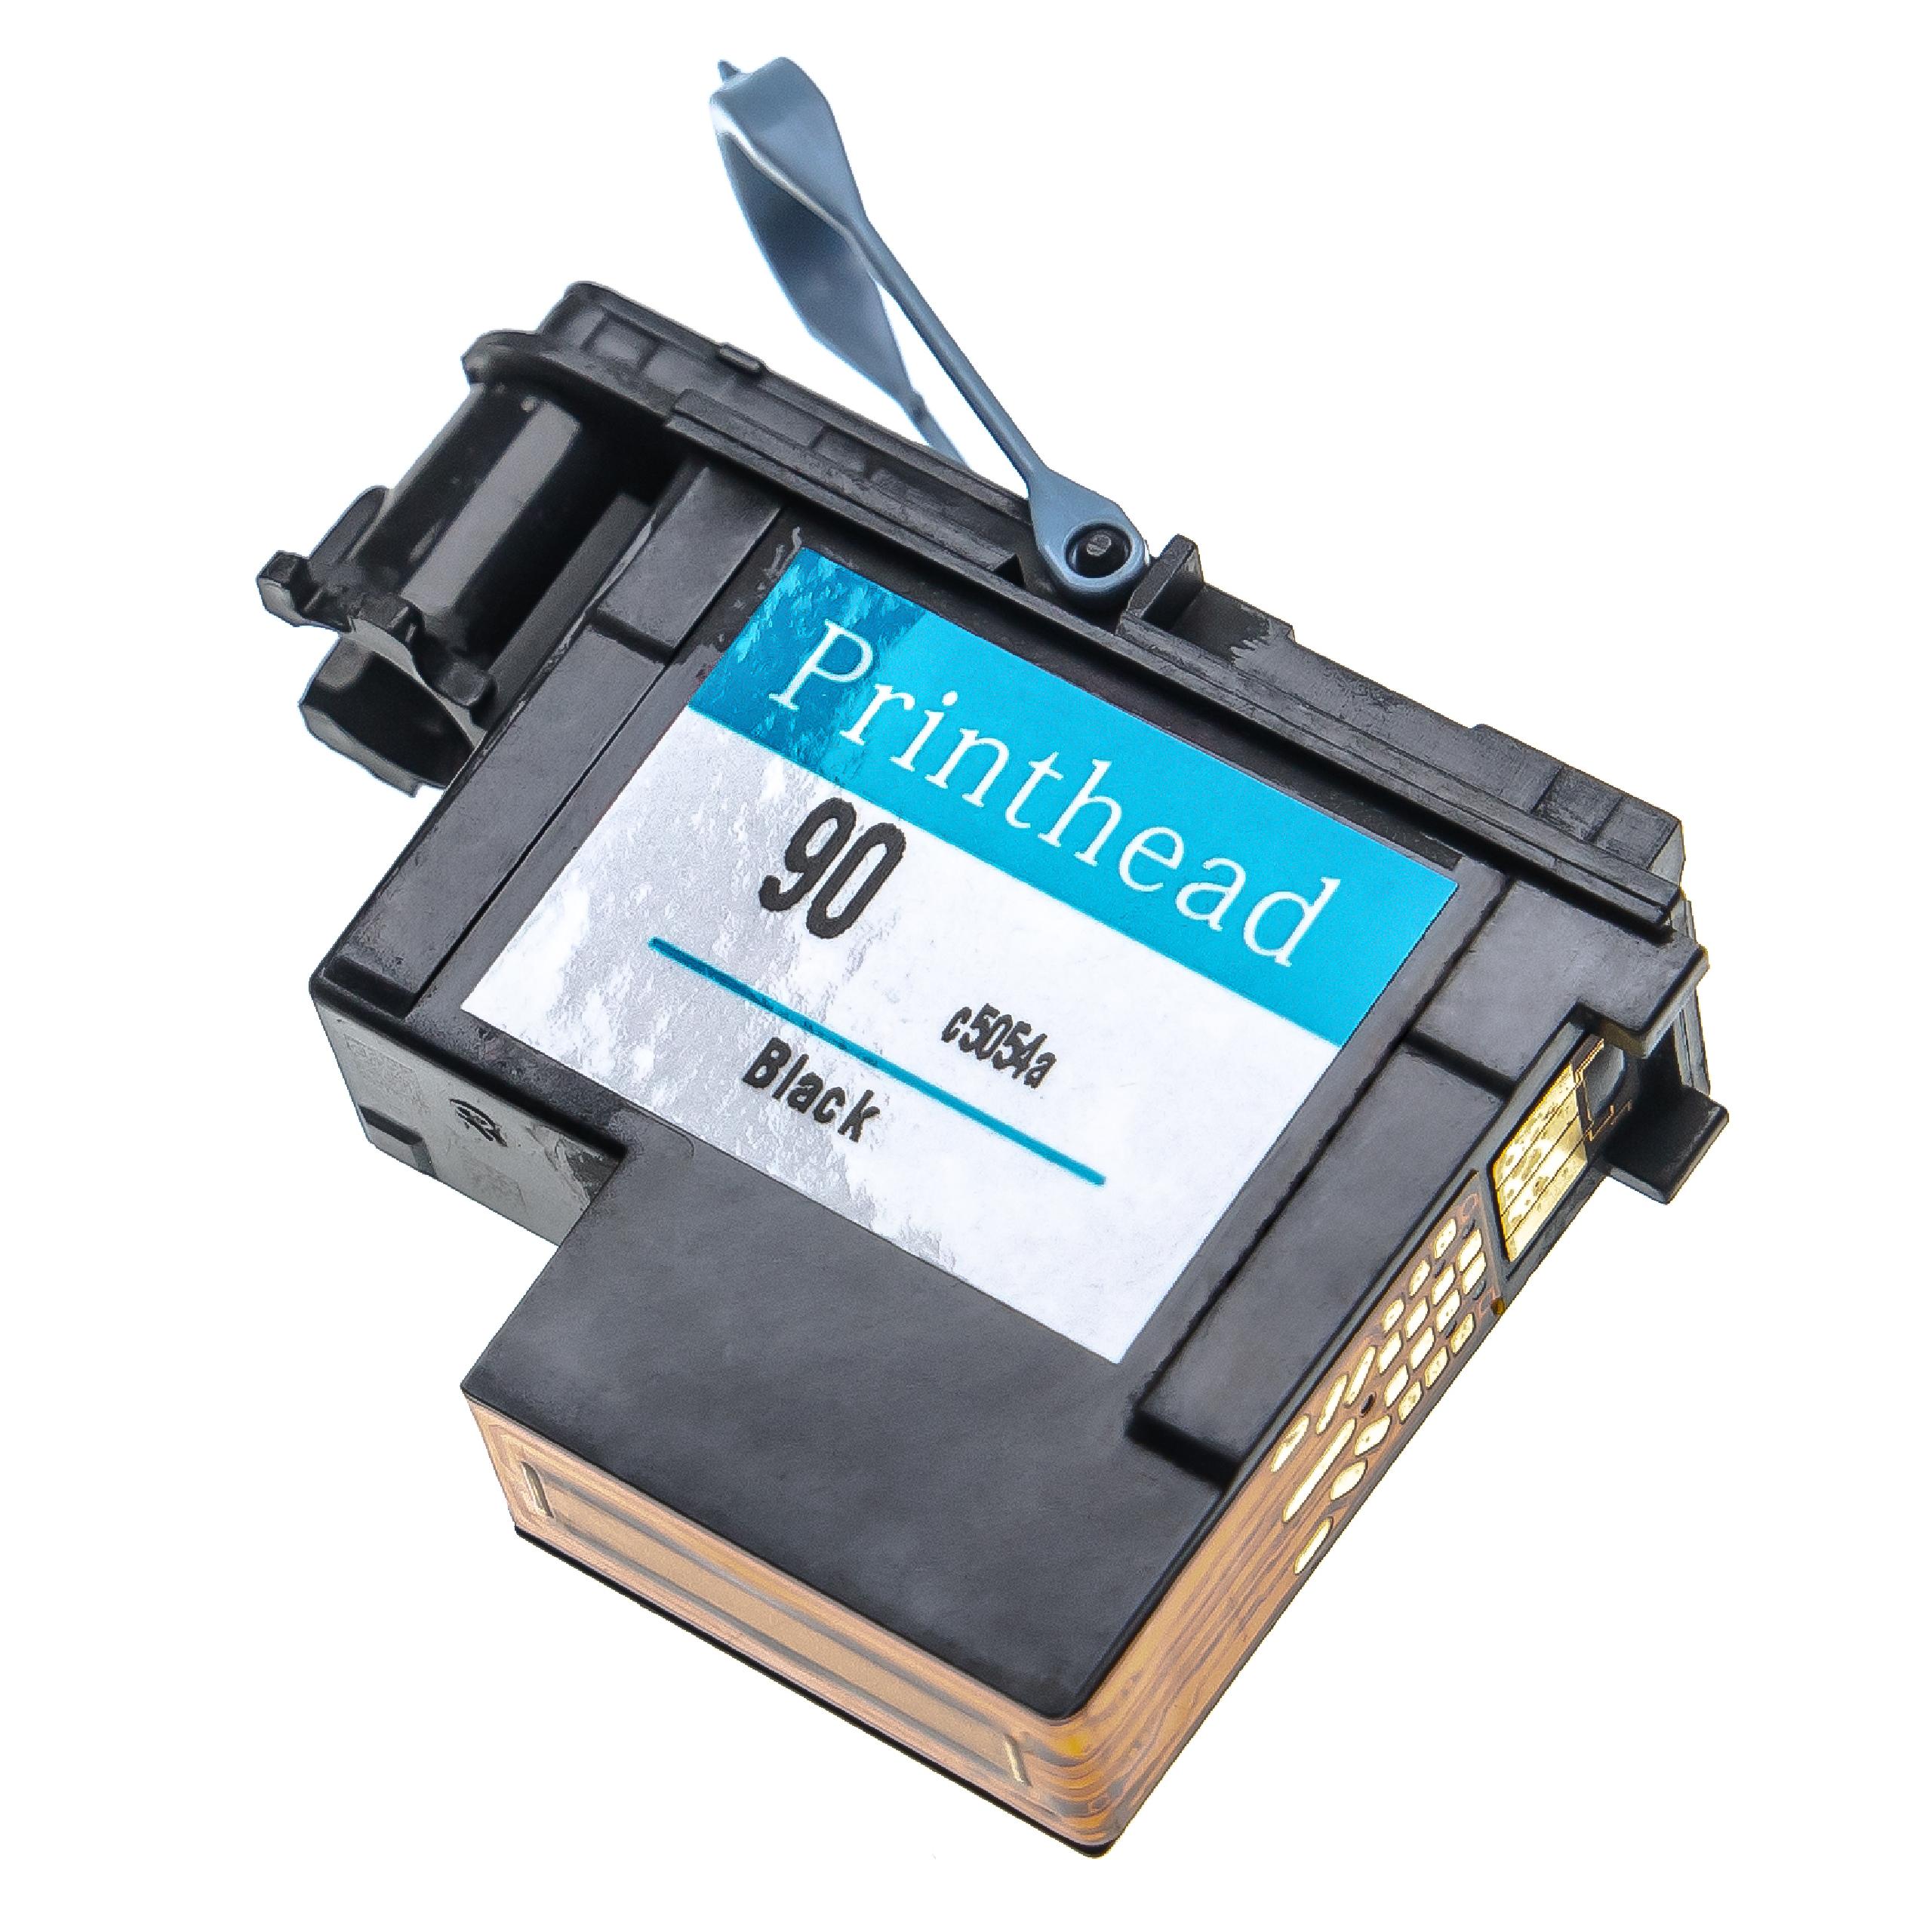 Cabezal para impresoras HP DesignJet HP C5054A - negro, ancho 6 cm reacondicionado + limpieza